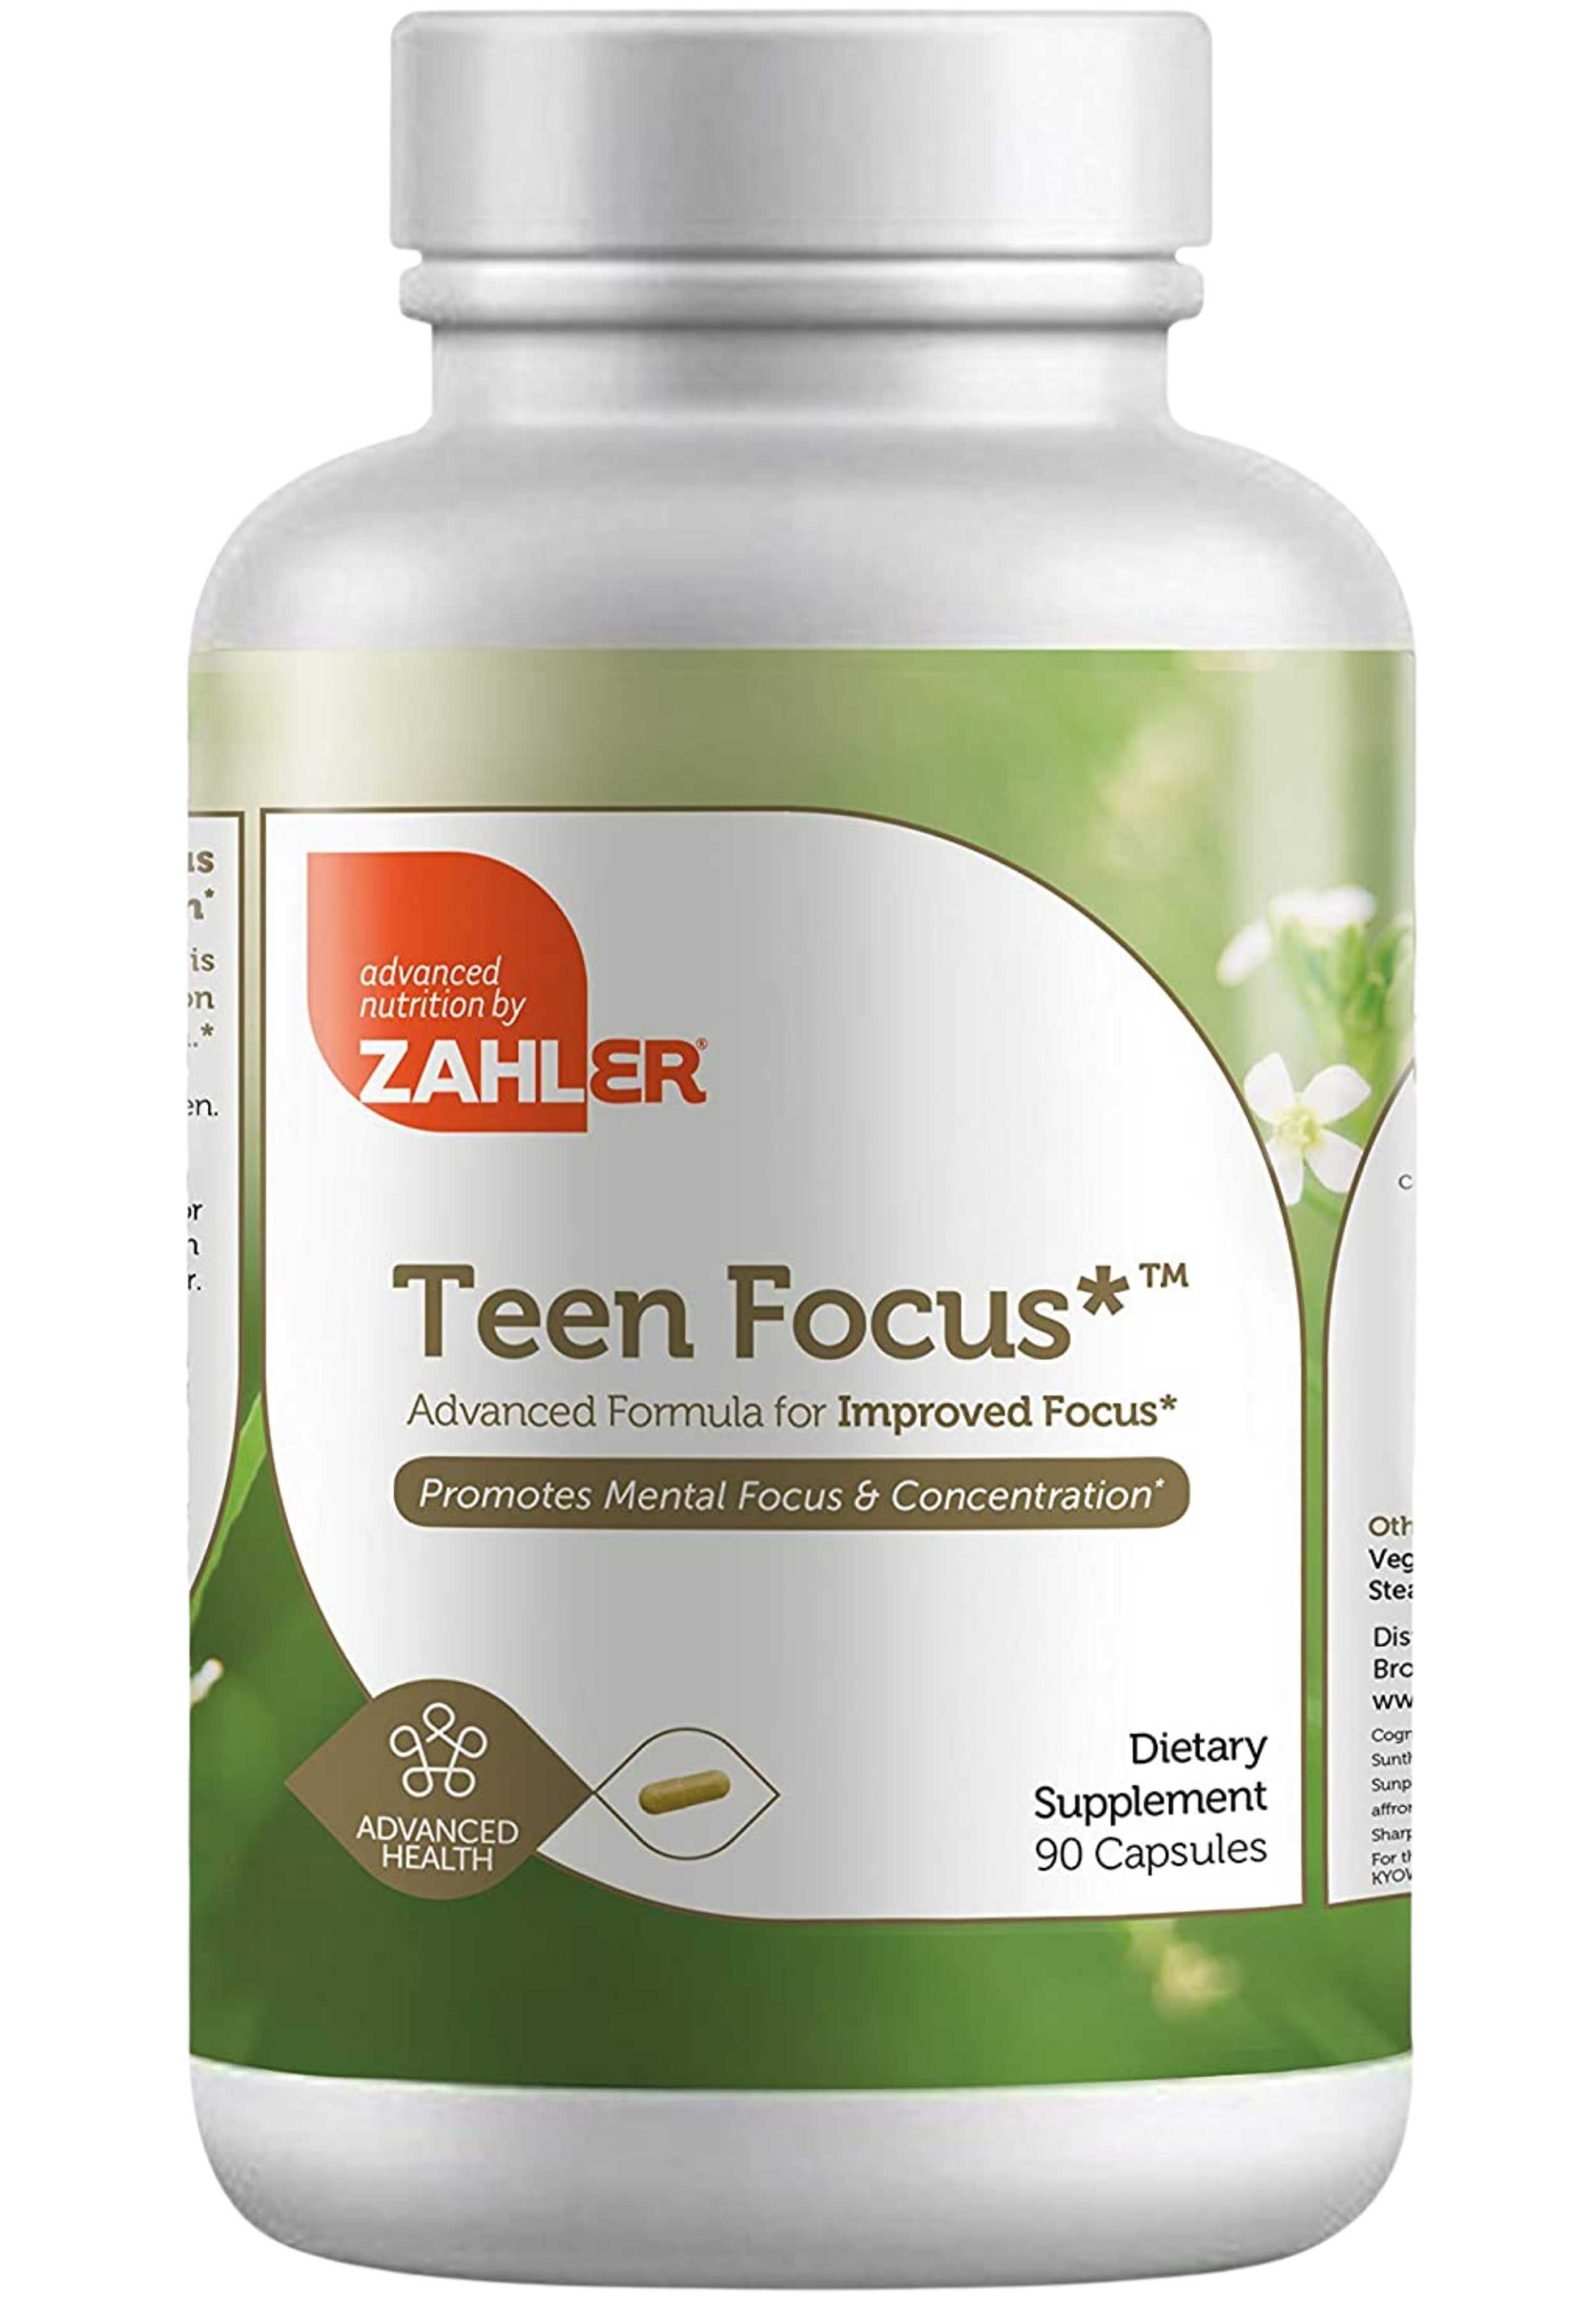 Advanced Nutrition By Zahler Teen Focus